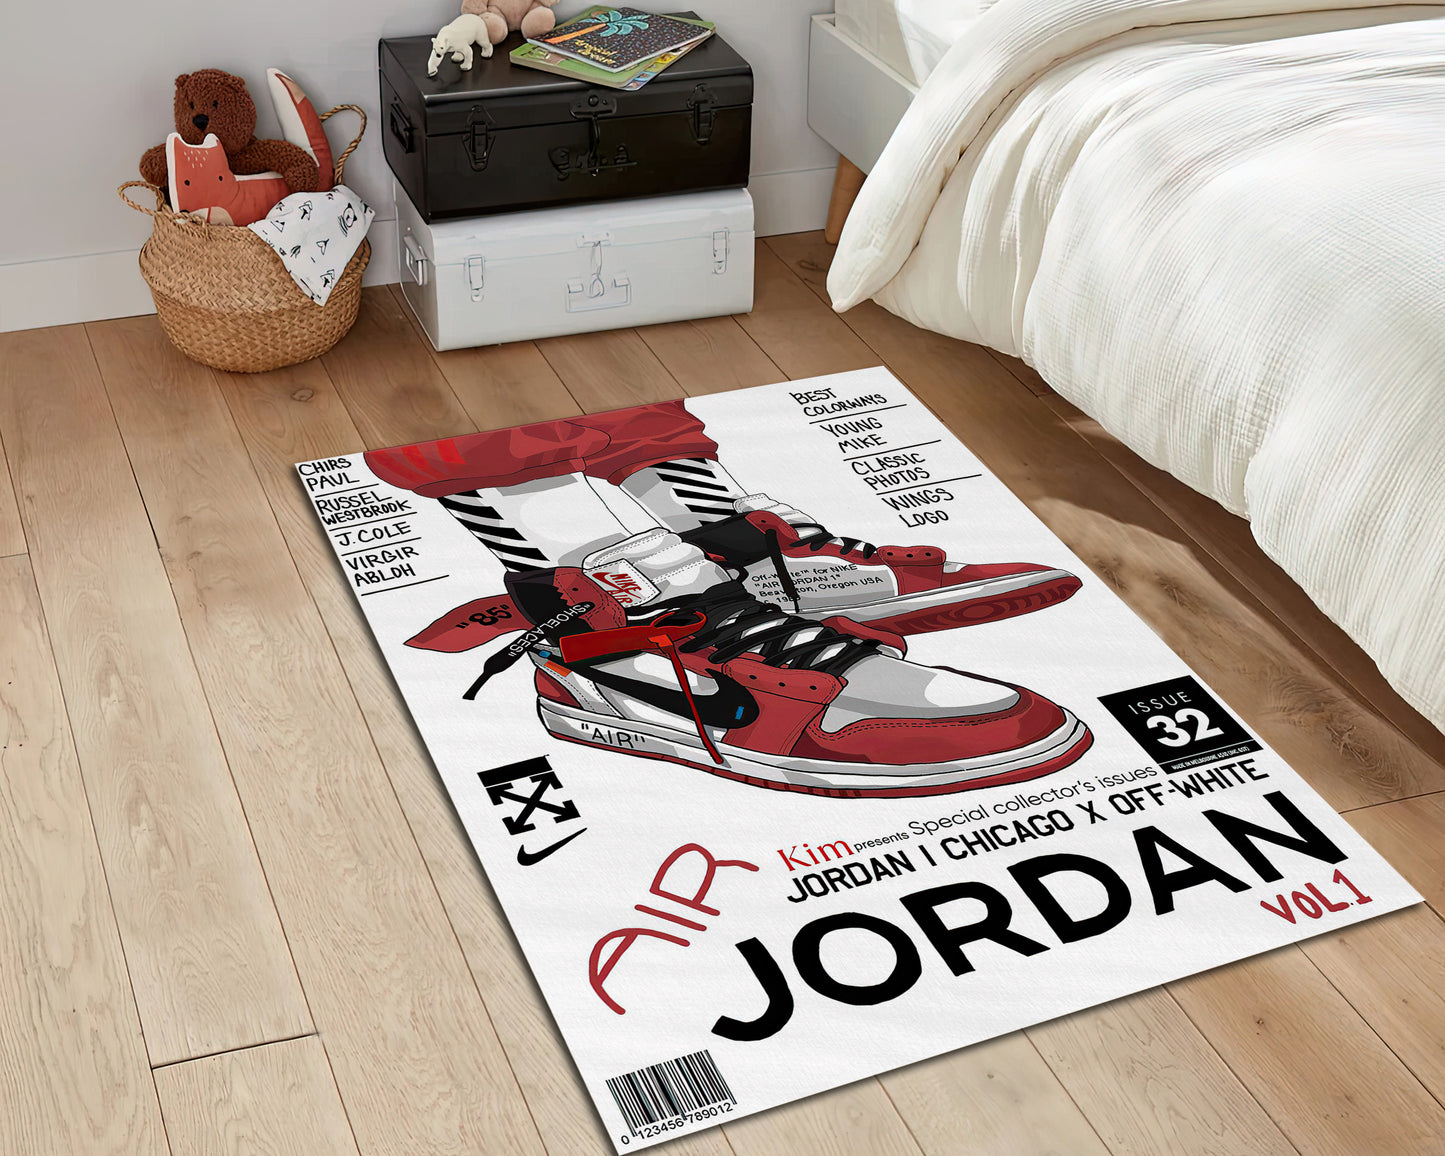 Graffiti Jordan Rug, Air Jordan Carpet, Sneaker Room Mat, Nike Rug, Sneakerhead Decor, Jordan Gift